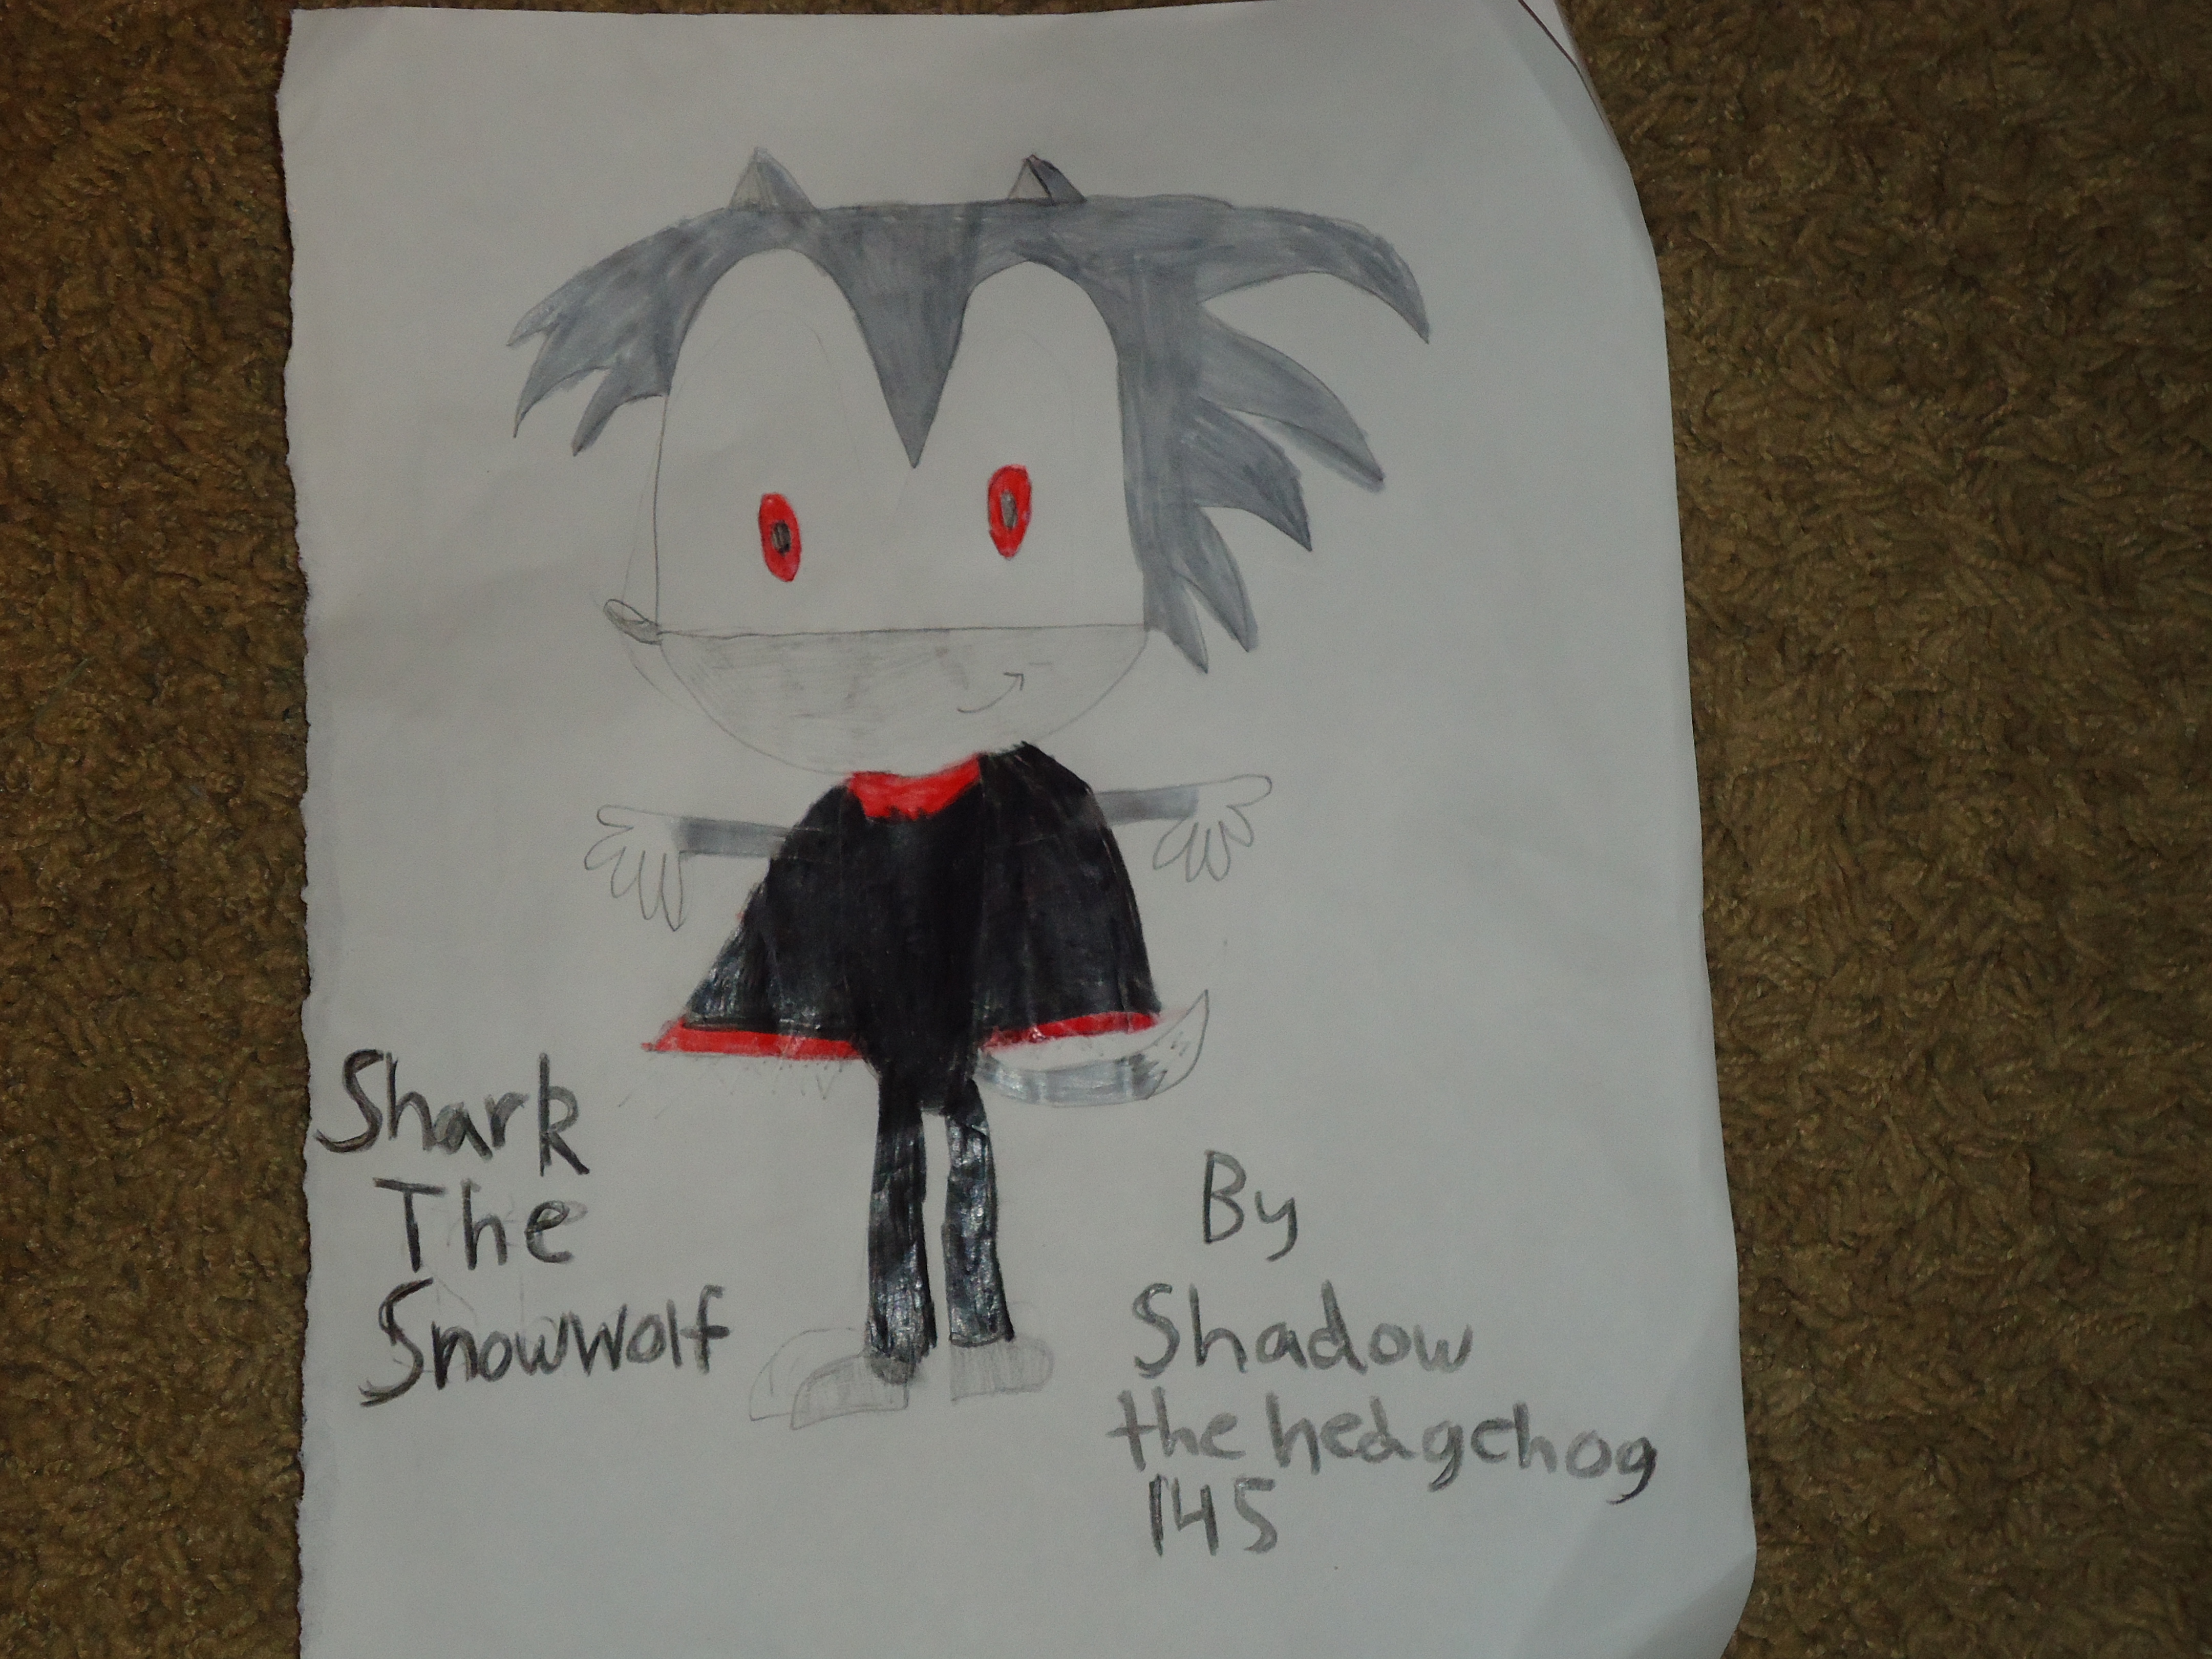 Shark The SnowWolf